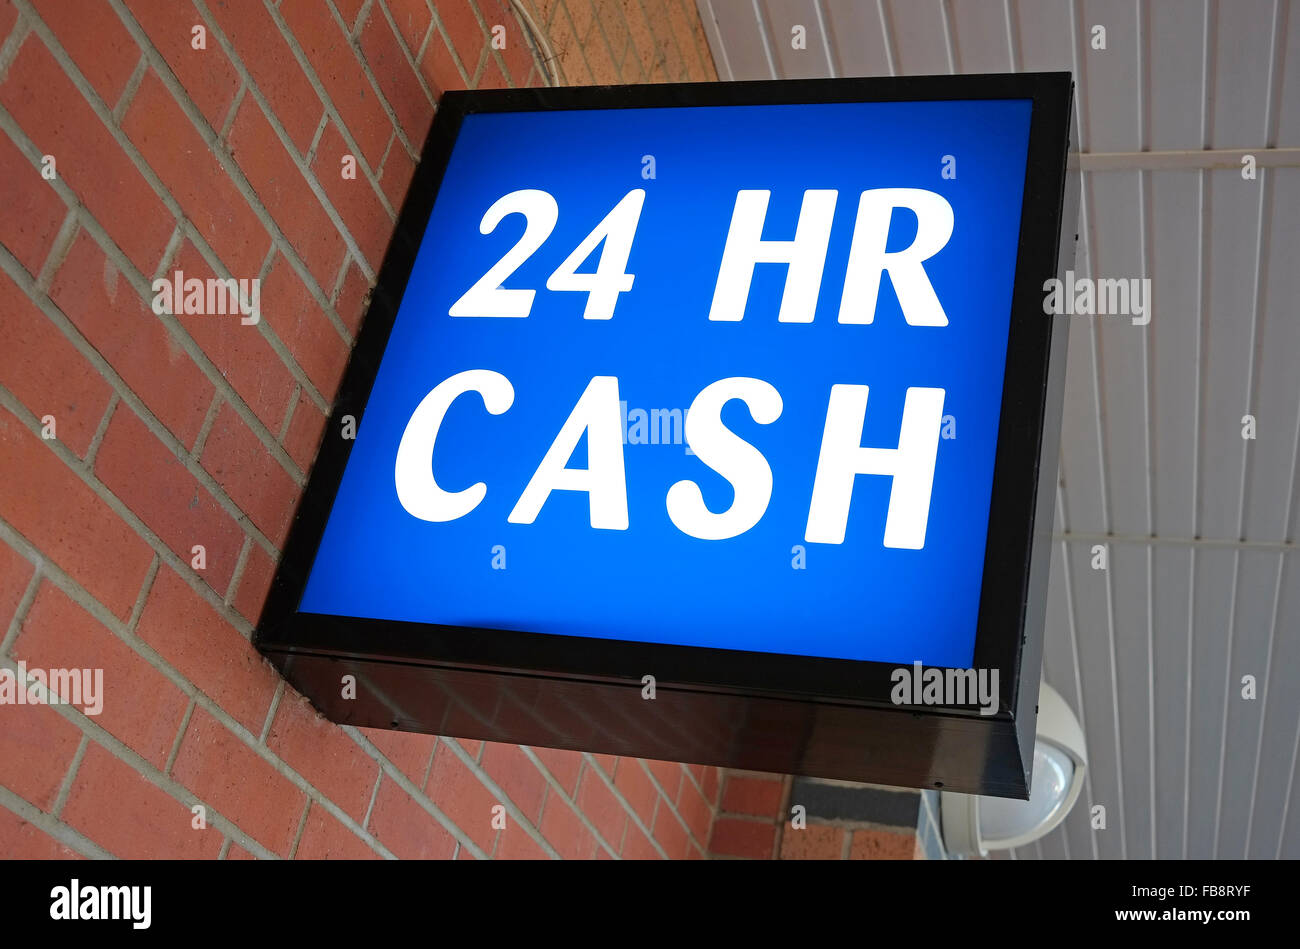 24 hr cash sign above atm machine Stock Photo